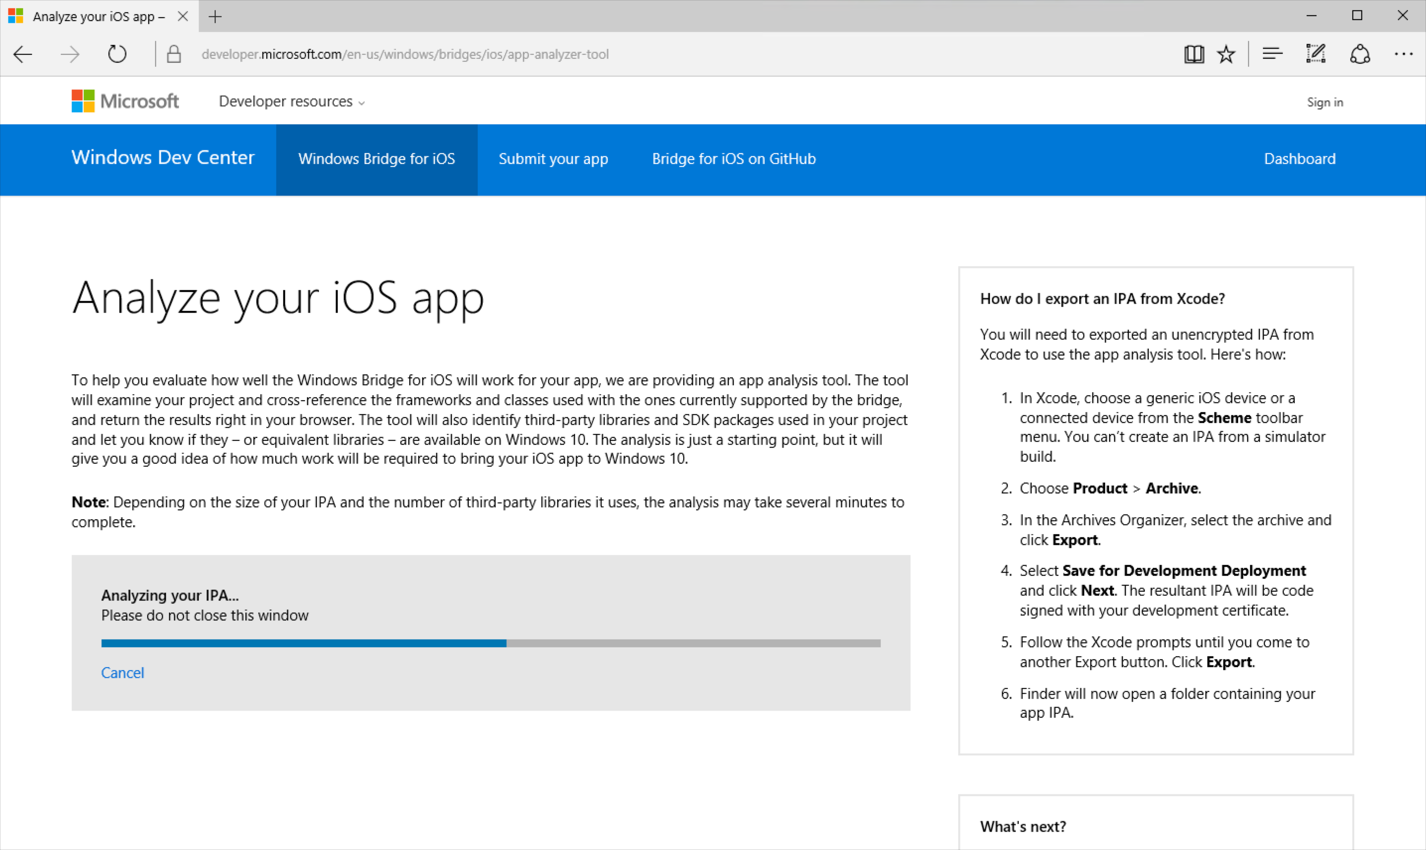 Microsoft announces new App Analysis tool for Windows Bridge for iOS